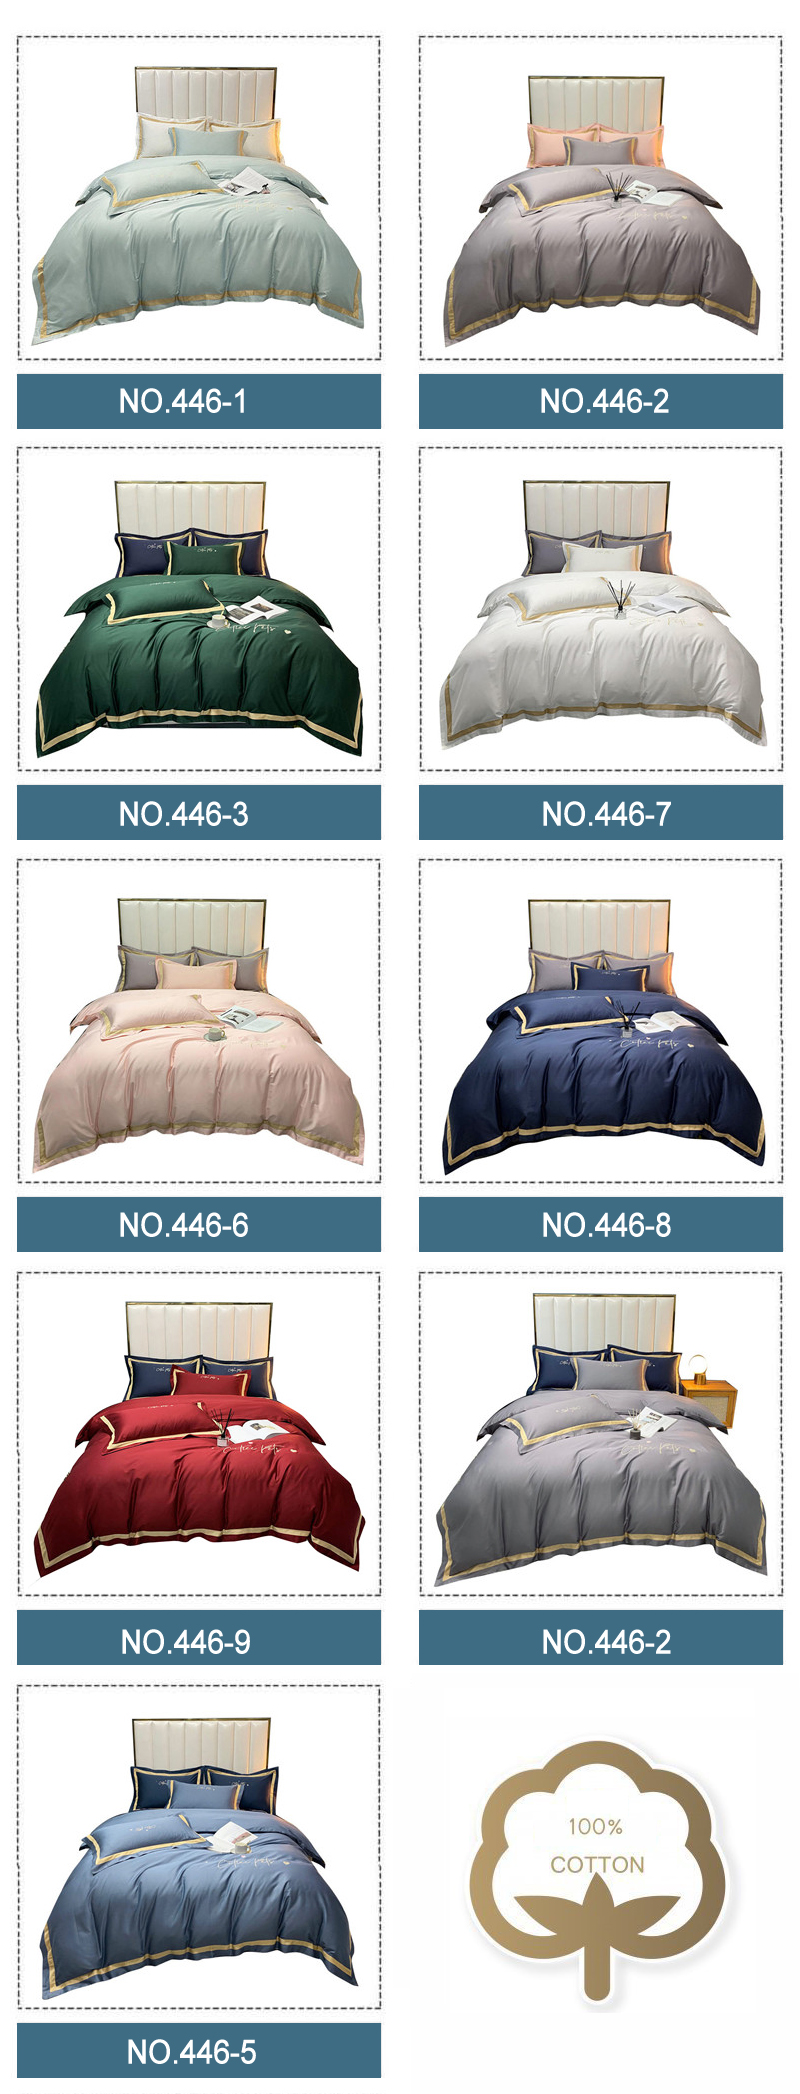 Bedding Textile Sleep Supportive